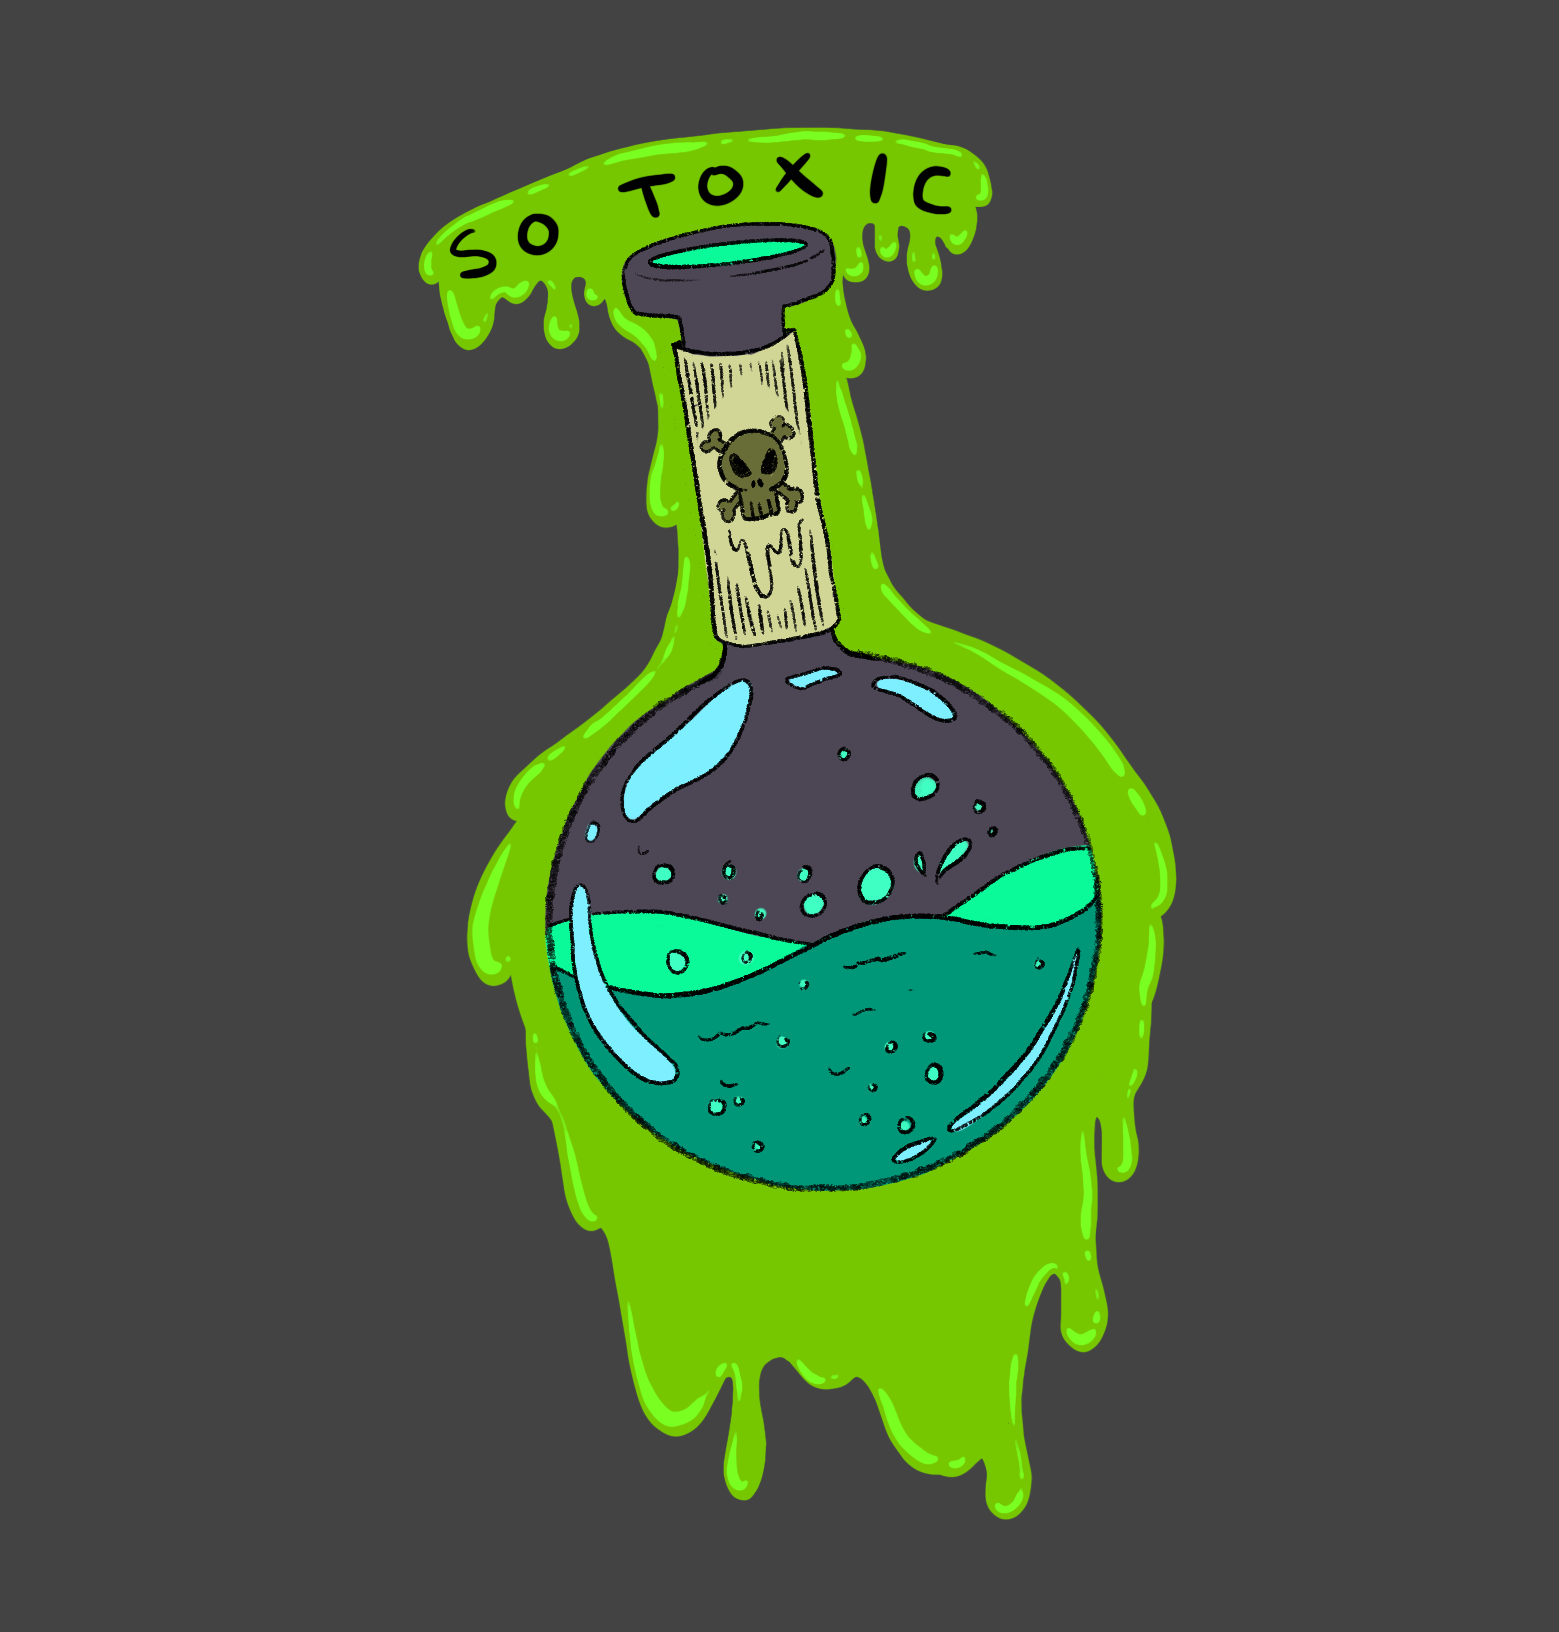 So Toxic A4 print